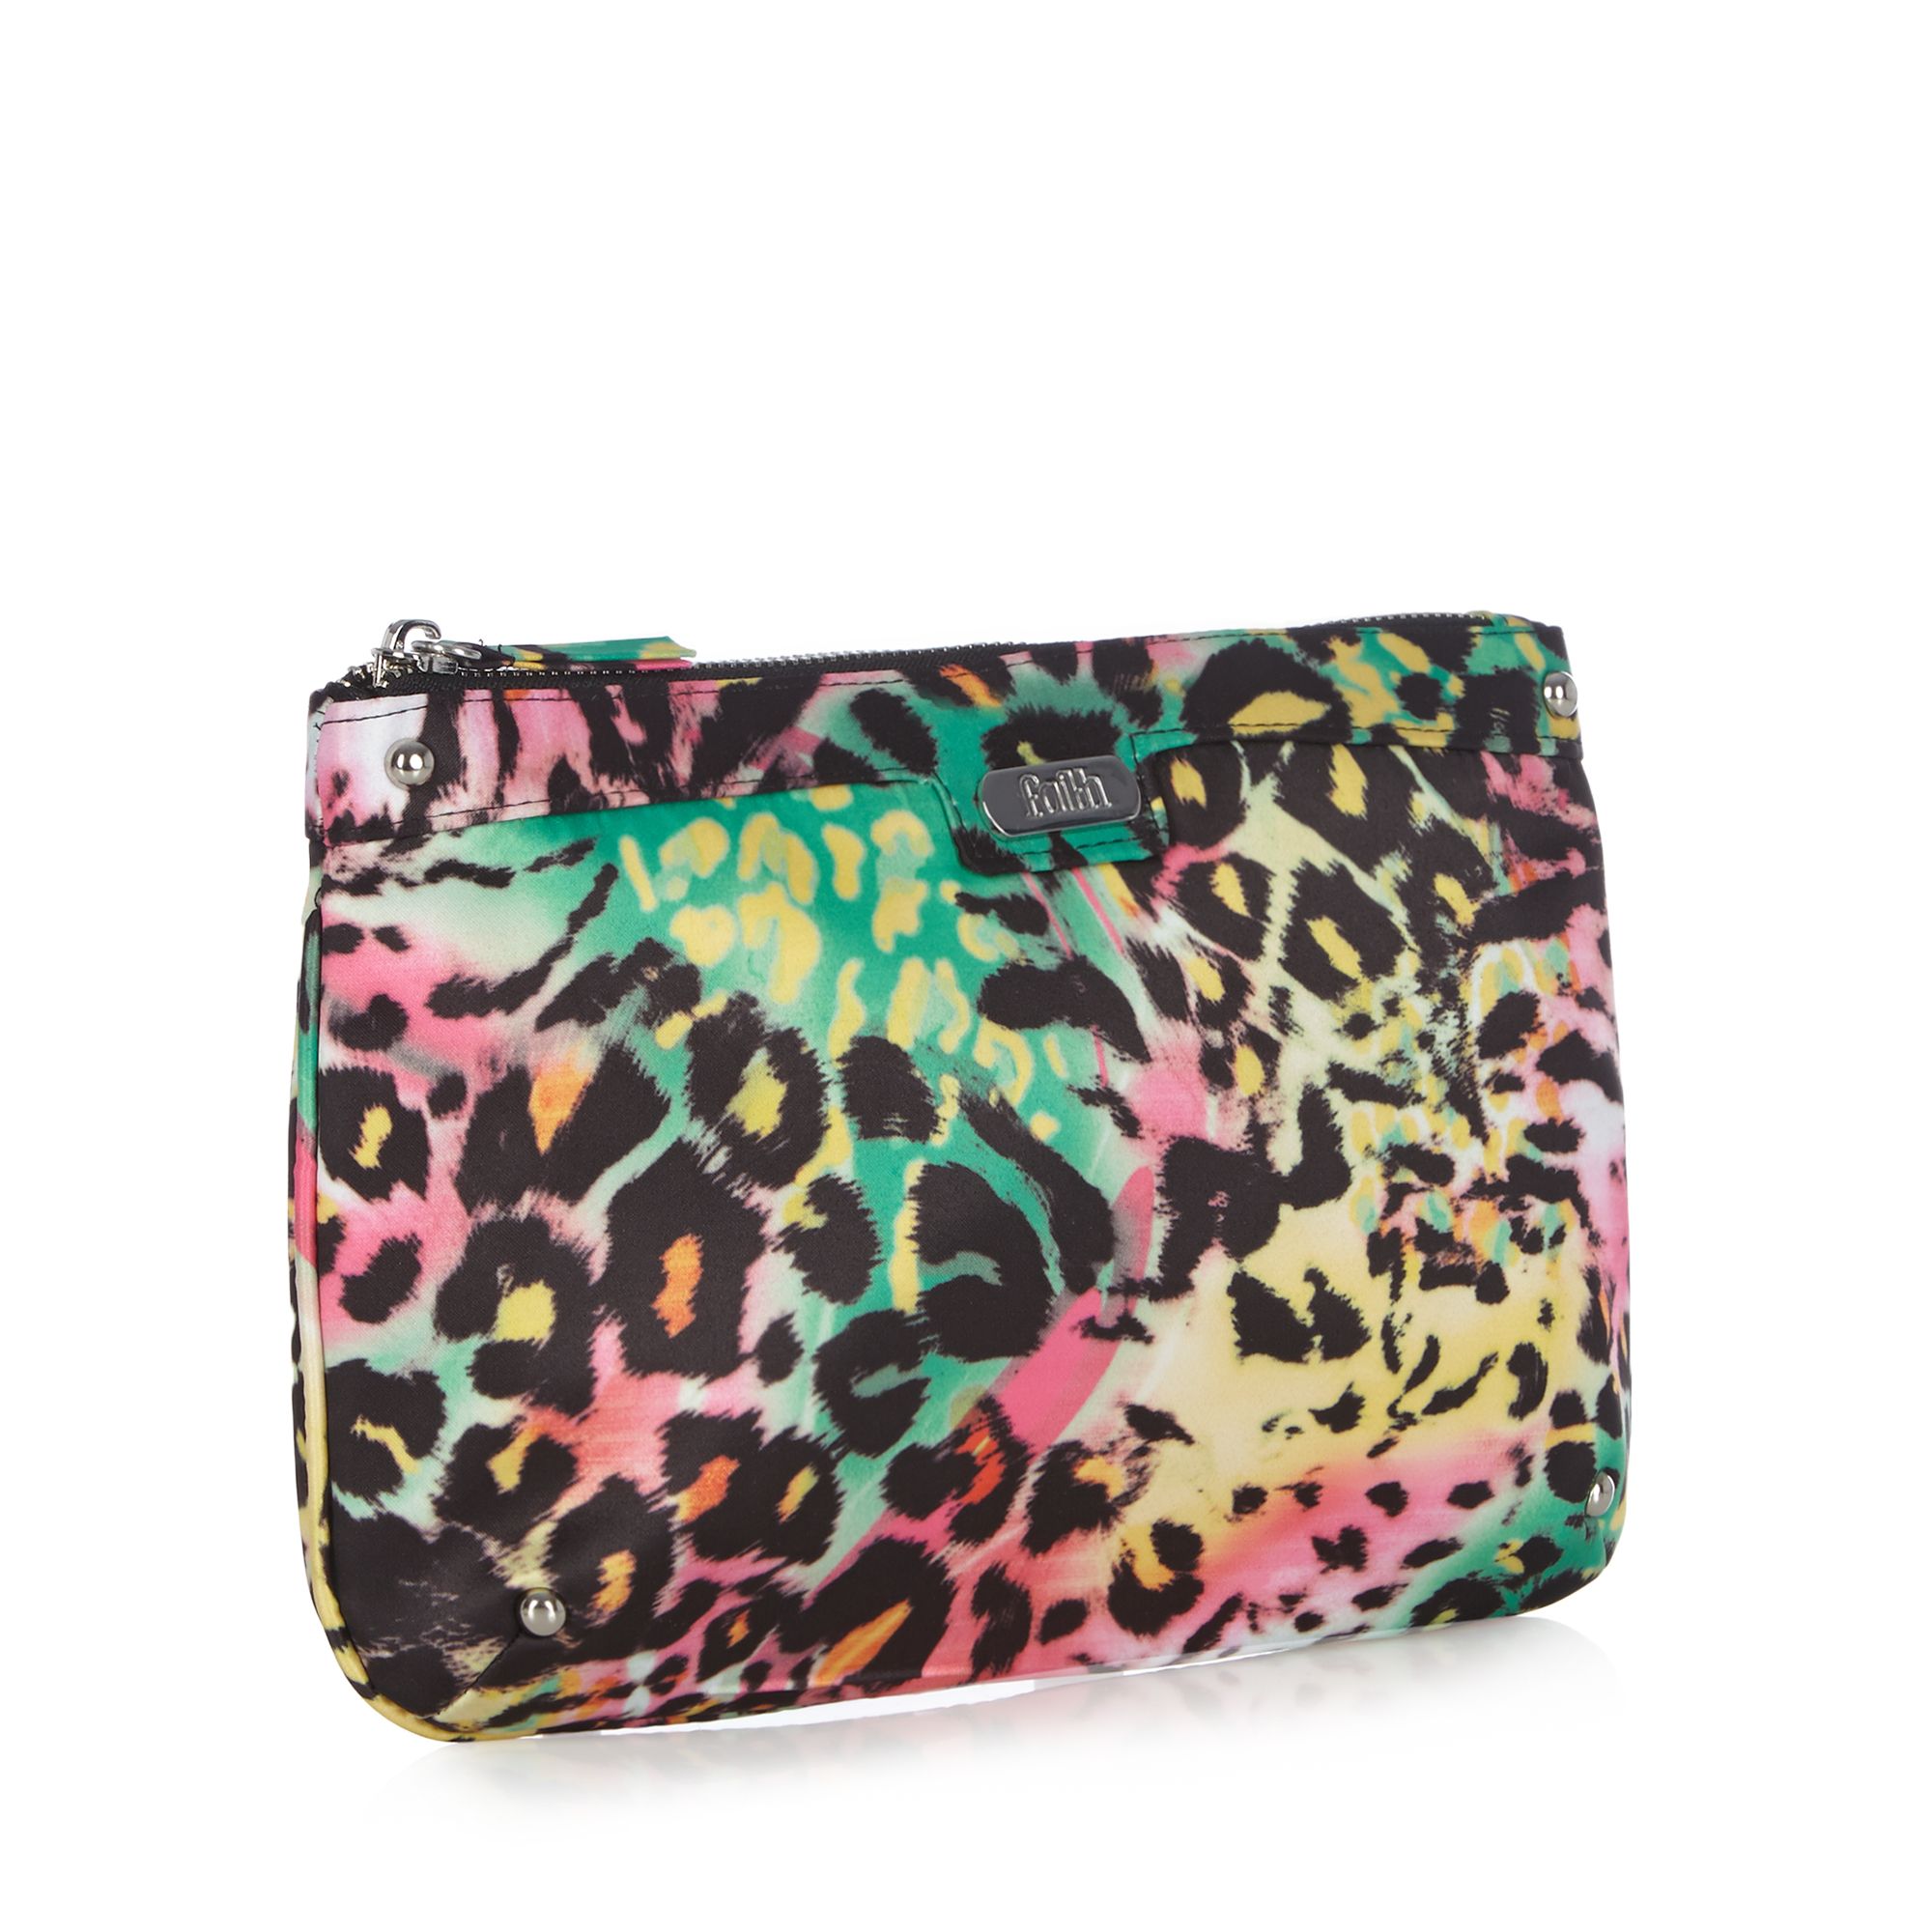 Faith Womens Green Animal Print Clutch Bag From Debenhams | eBay